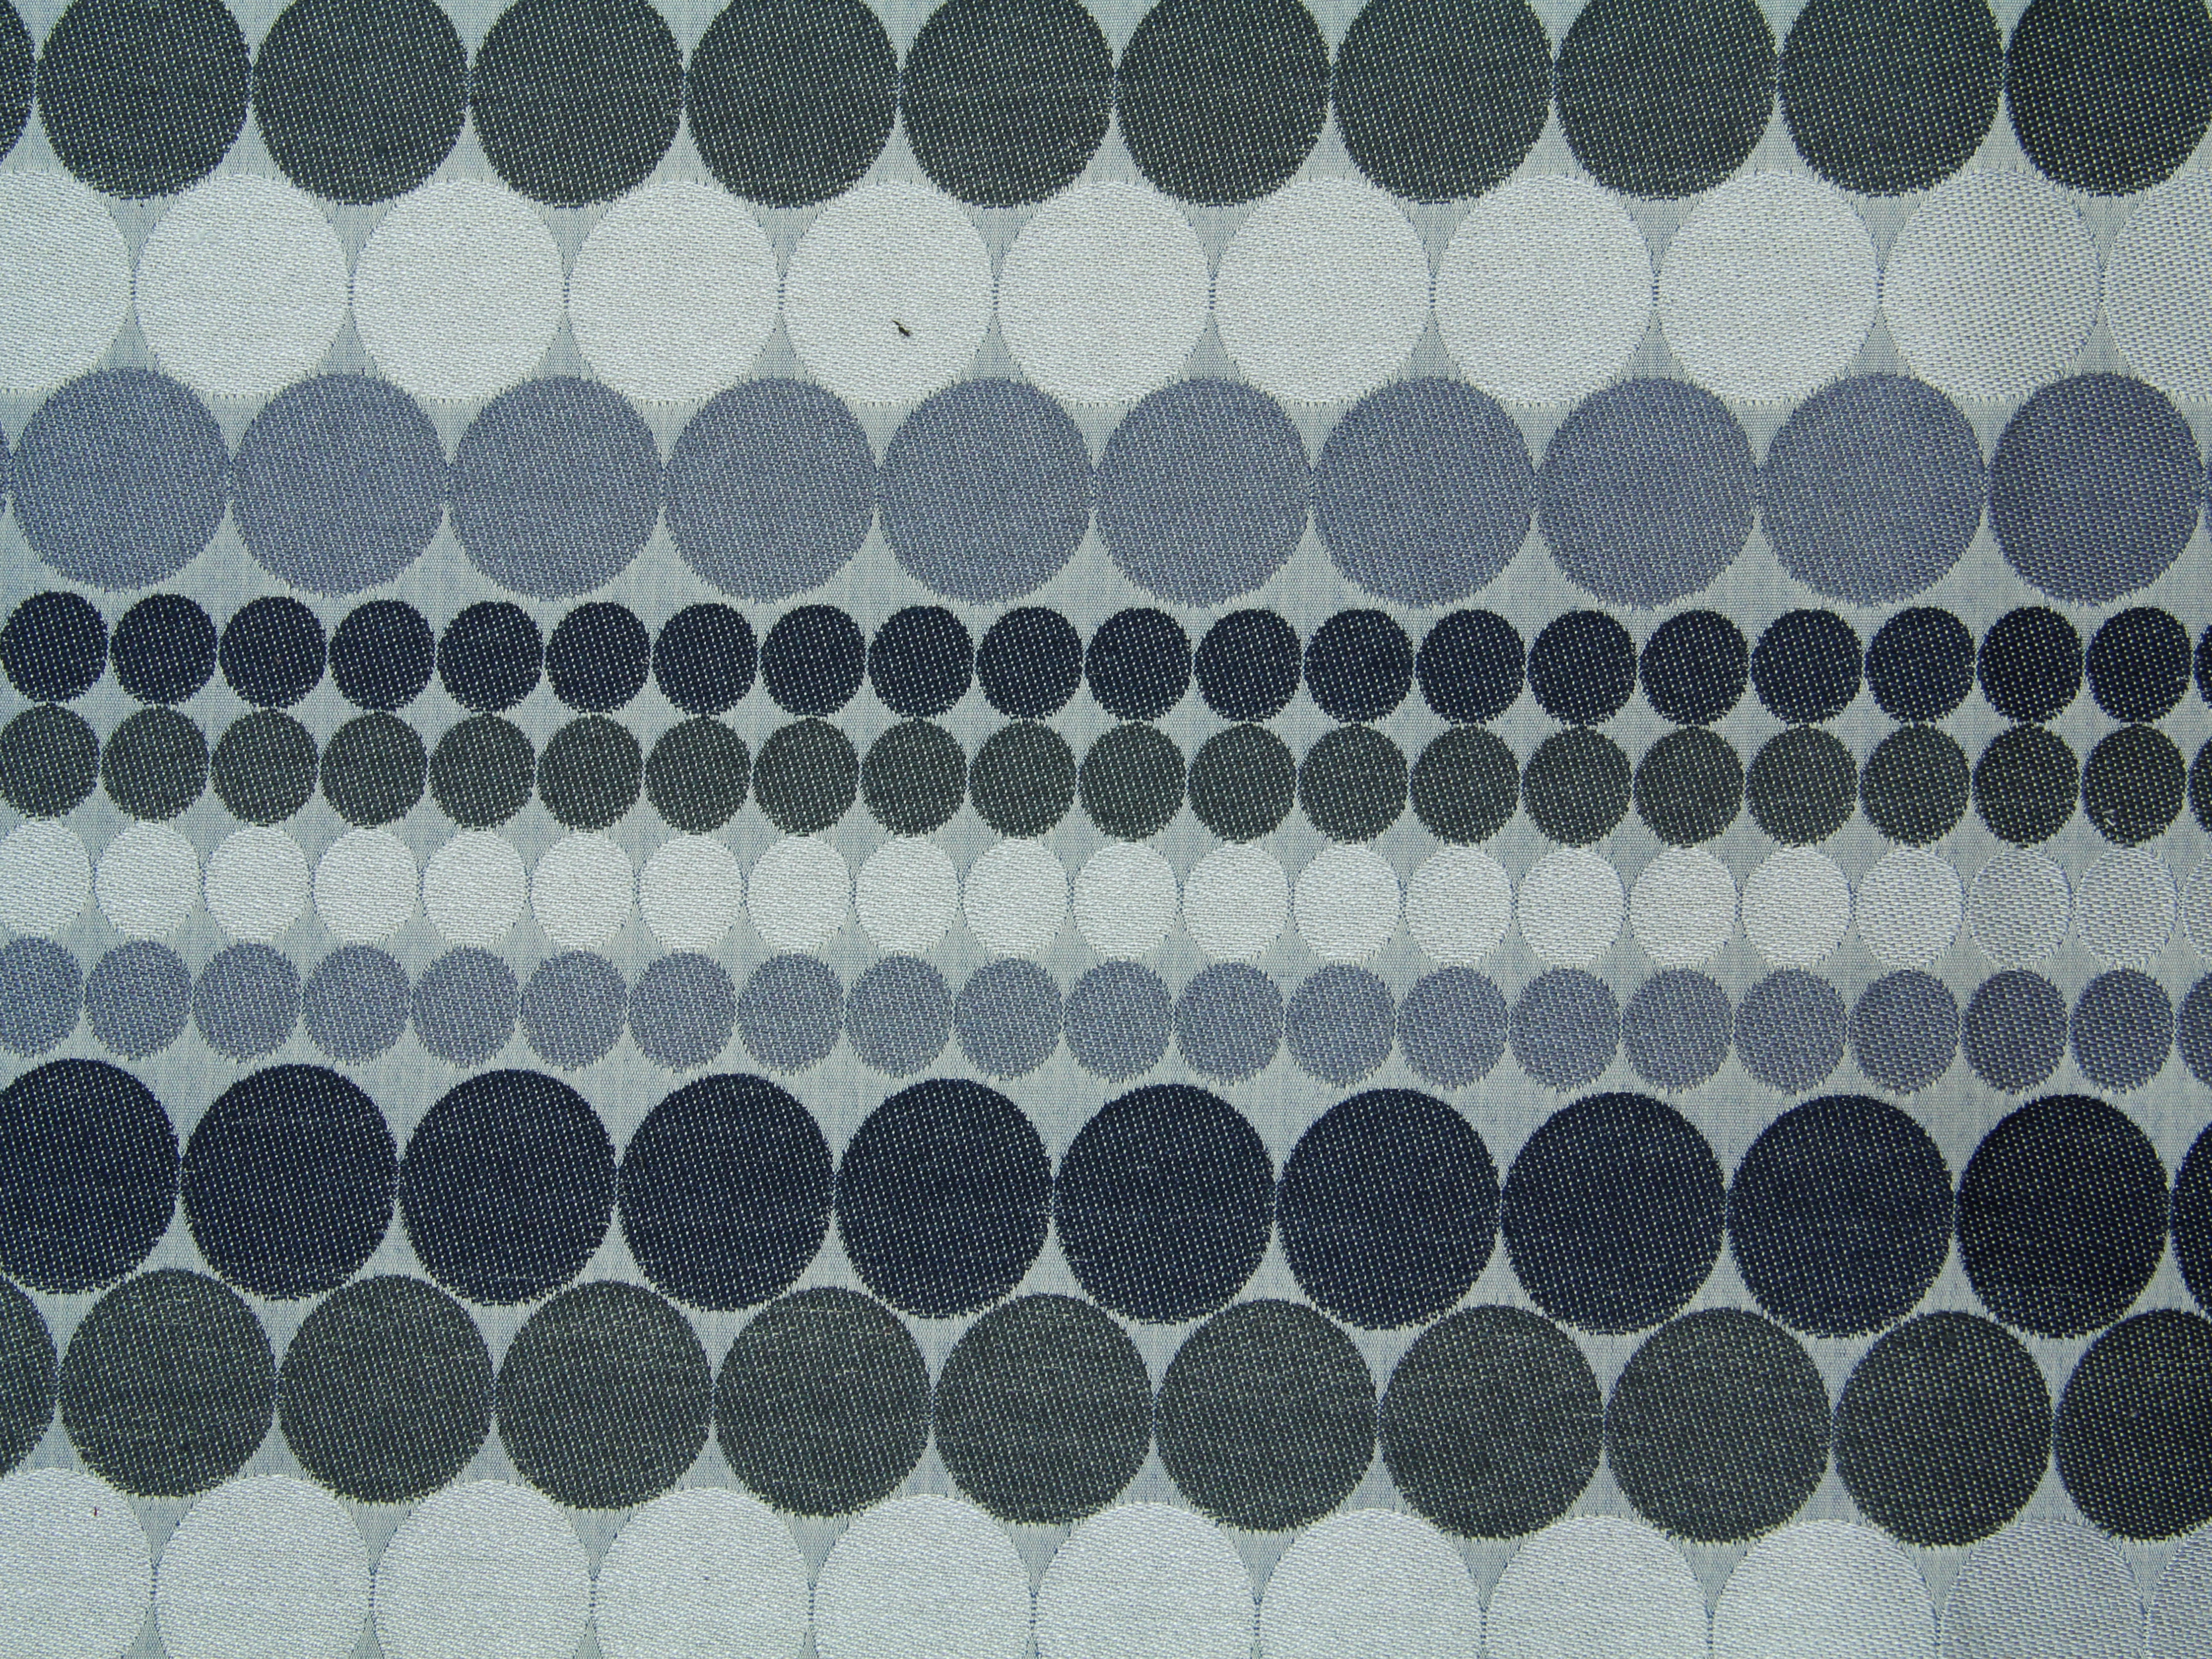  Fabric Textures fabric texture blue circle pattern wallpaper design